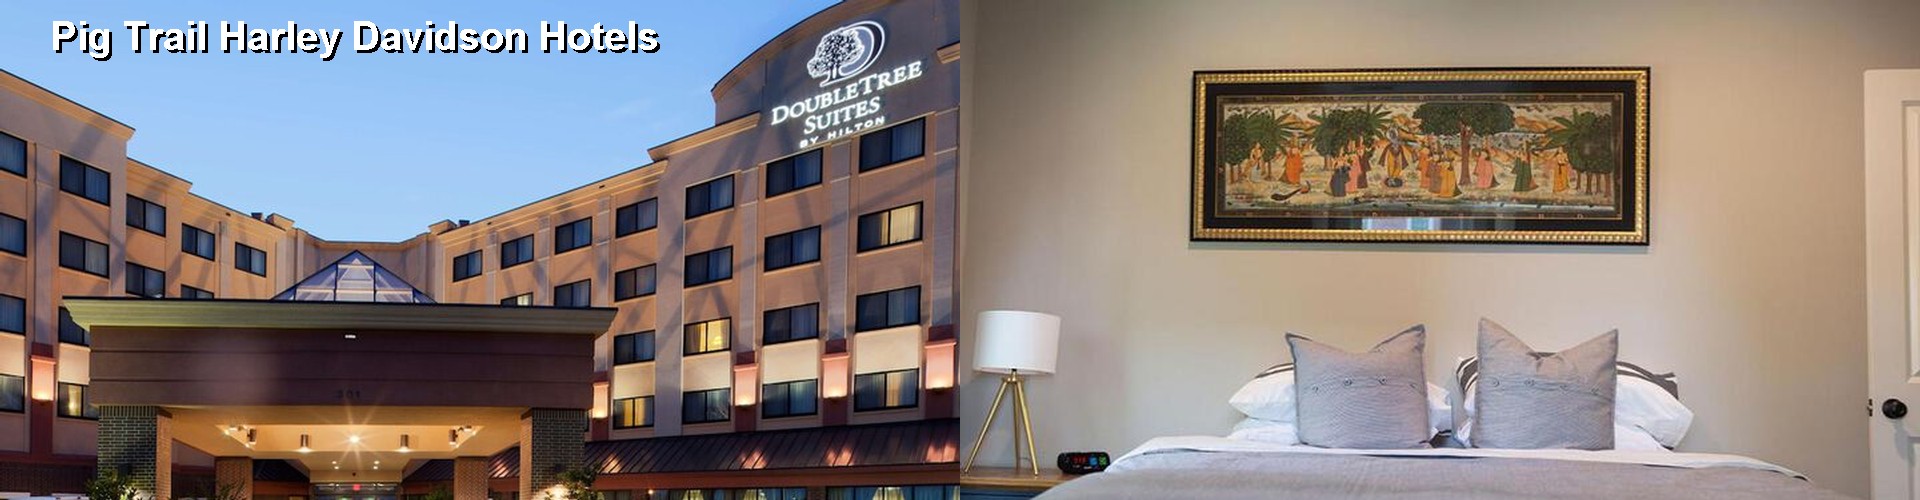 5 Best Hotels near Pig Trail Harley Davidson